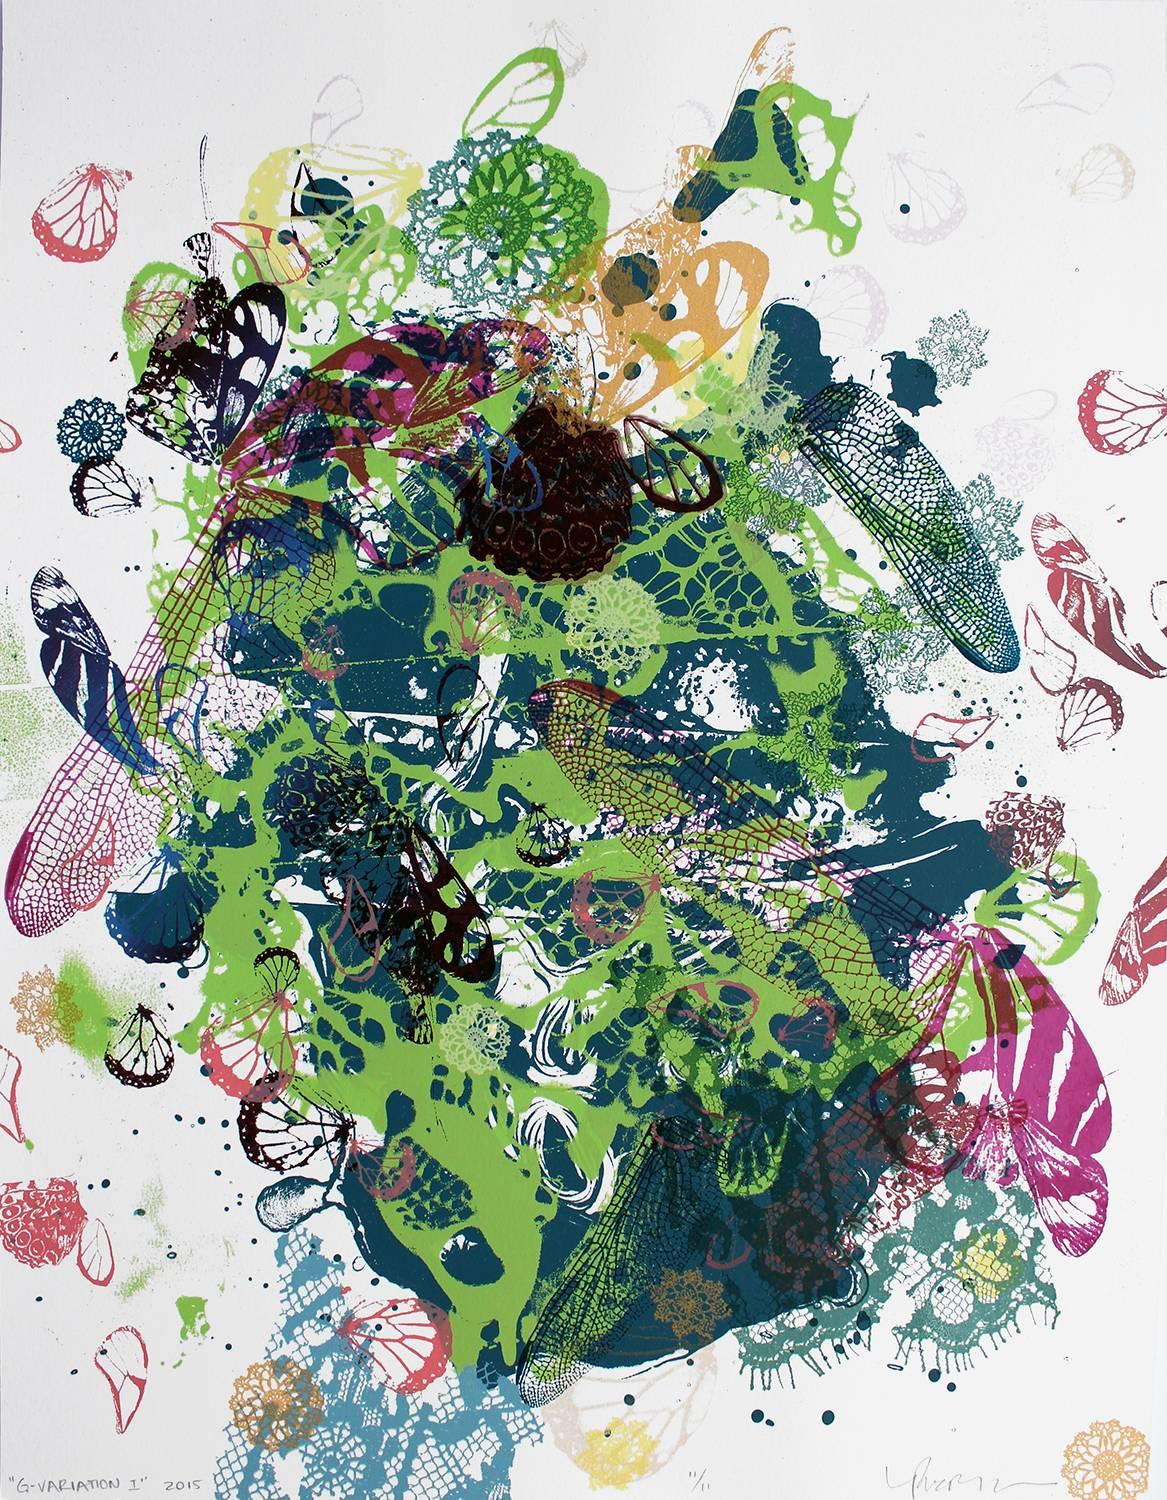 Lina Puerta Abstract Print - G - Variation I